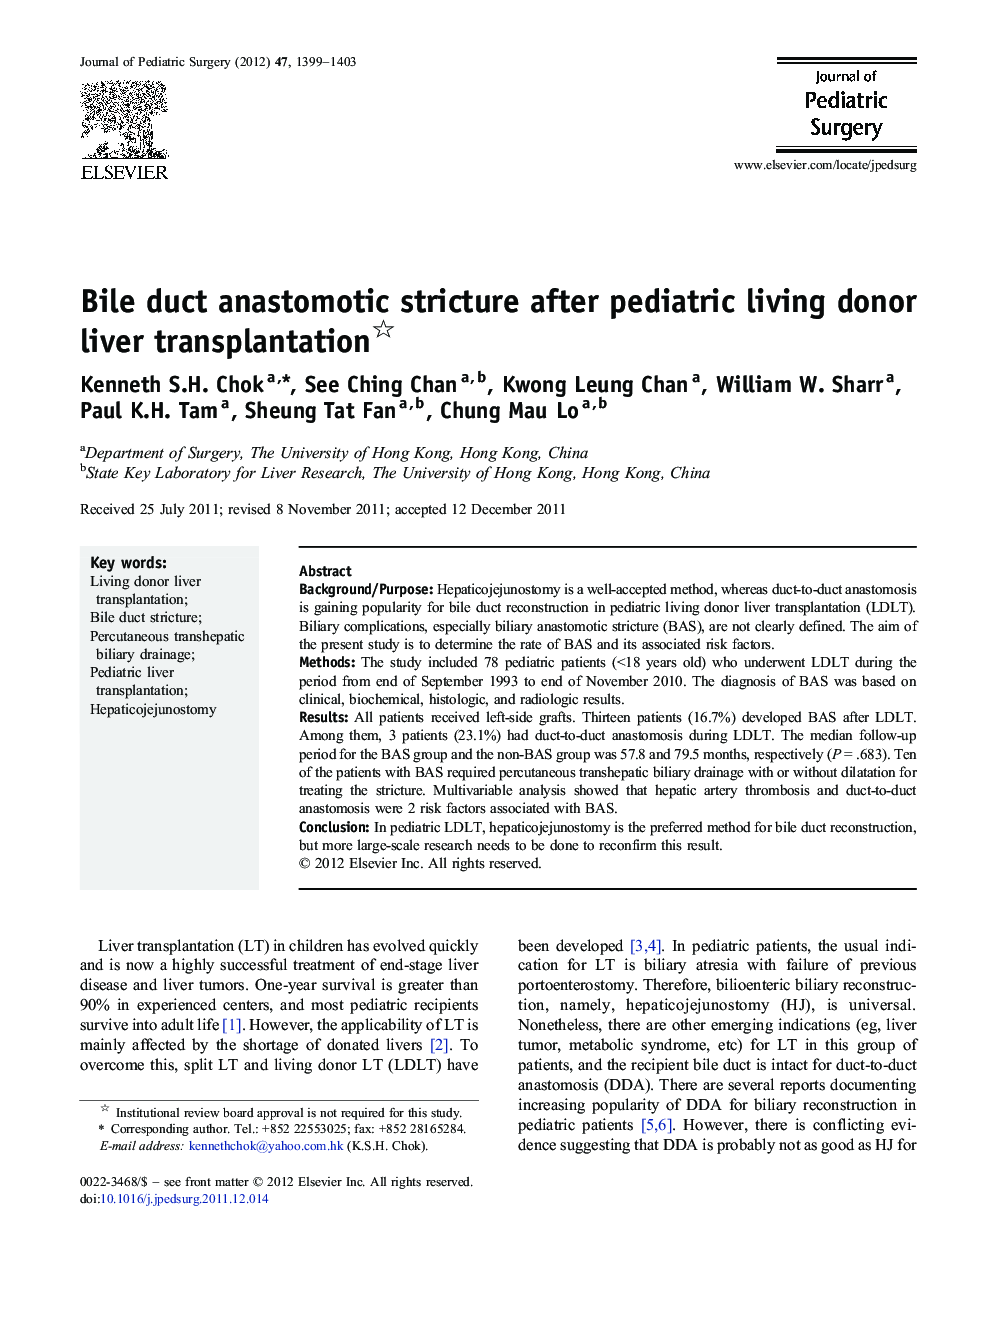 Bile duct anastomotic stricture after pediatric living donor liver transplantation 